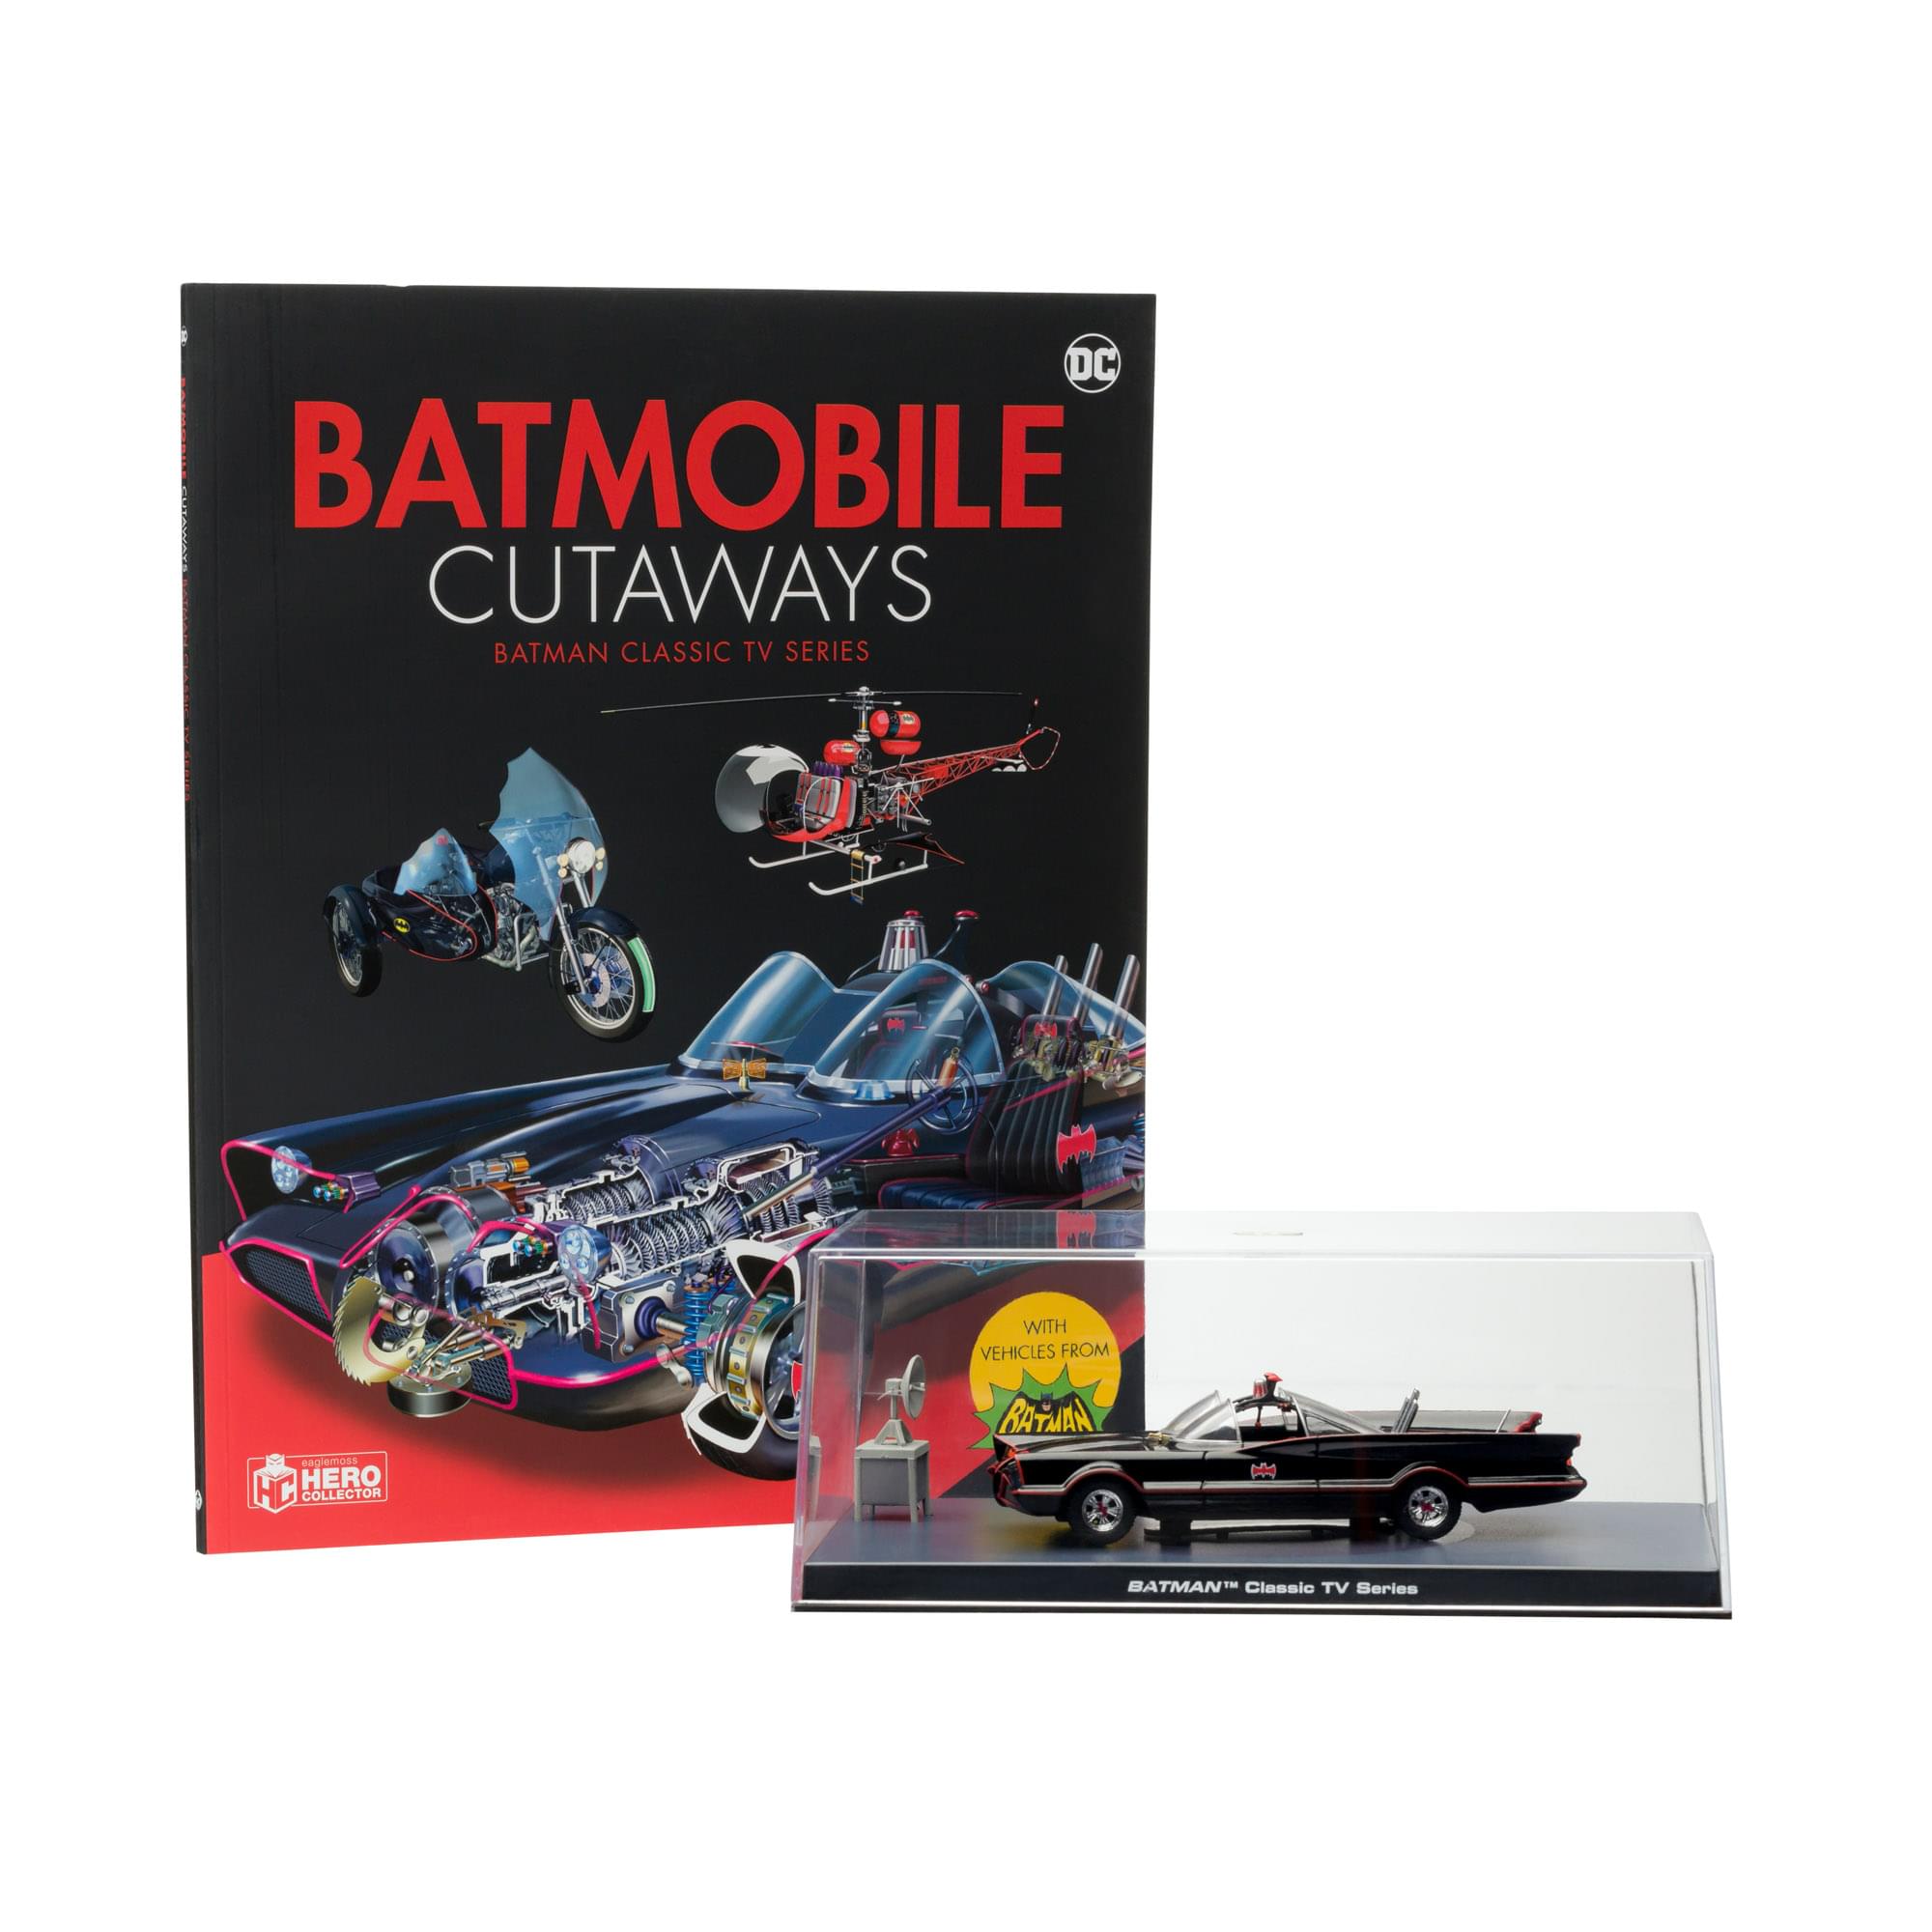 Photos - Other Toys Eaglemoss DC Batmobile Cutaways Book and Collectible Car Batman Classic TV